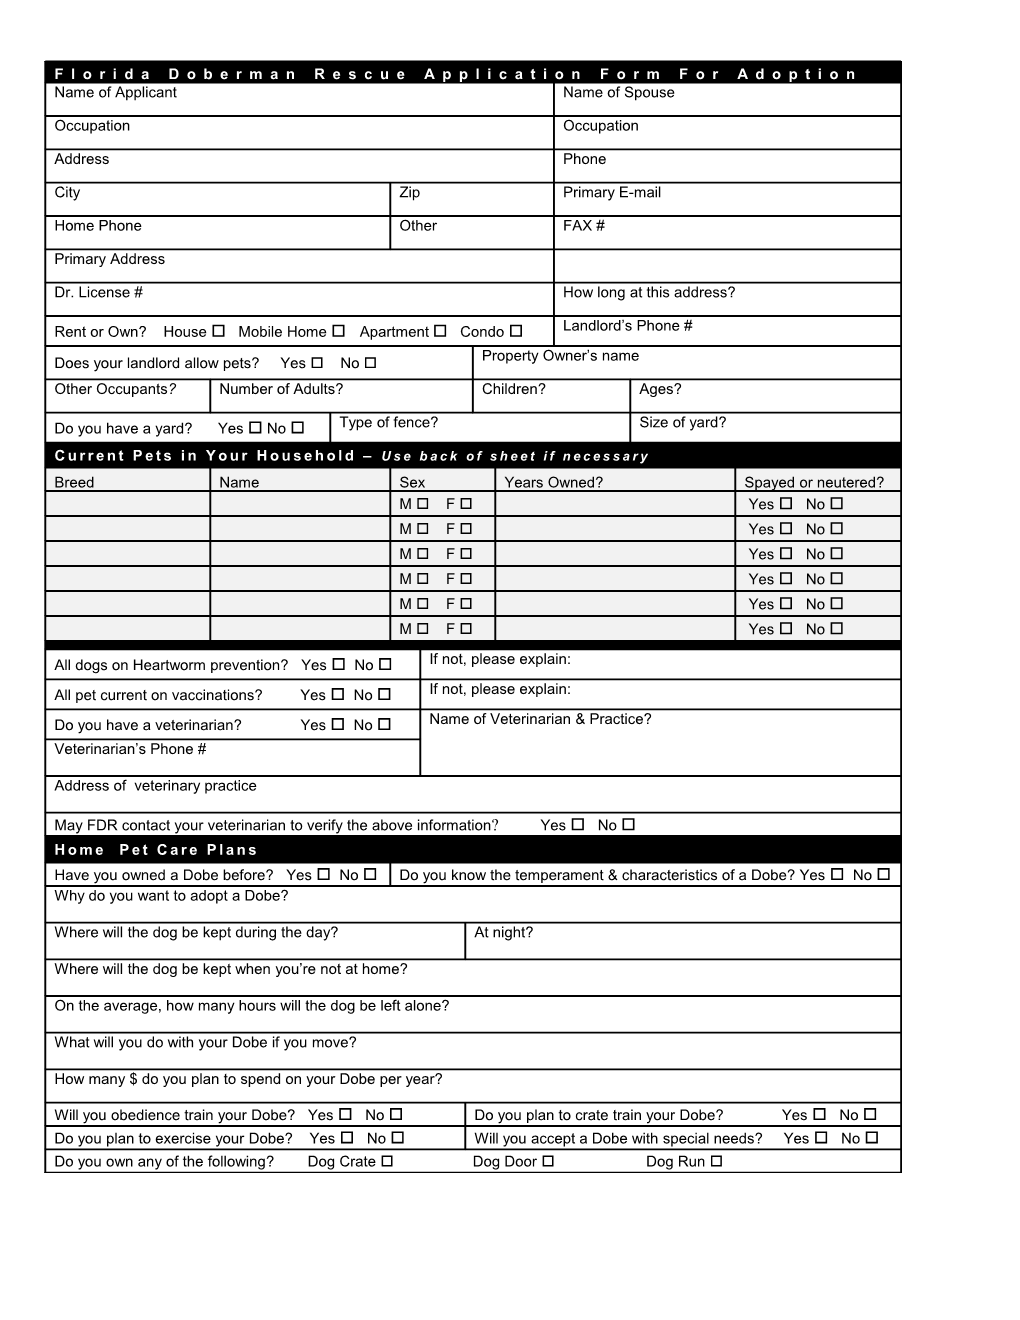 Florida Doberman Rescue Application Form for Adoption